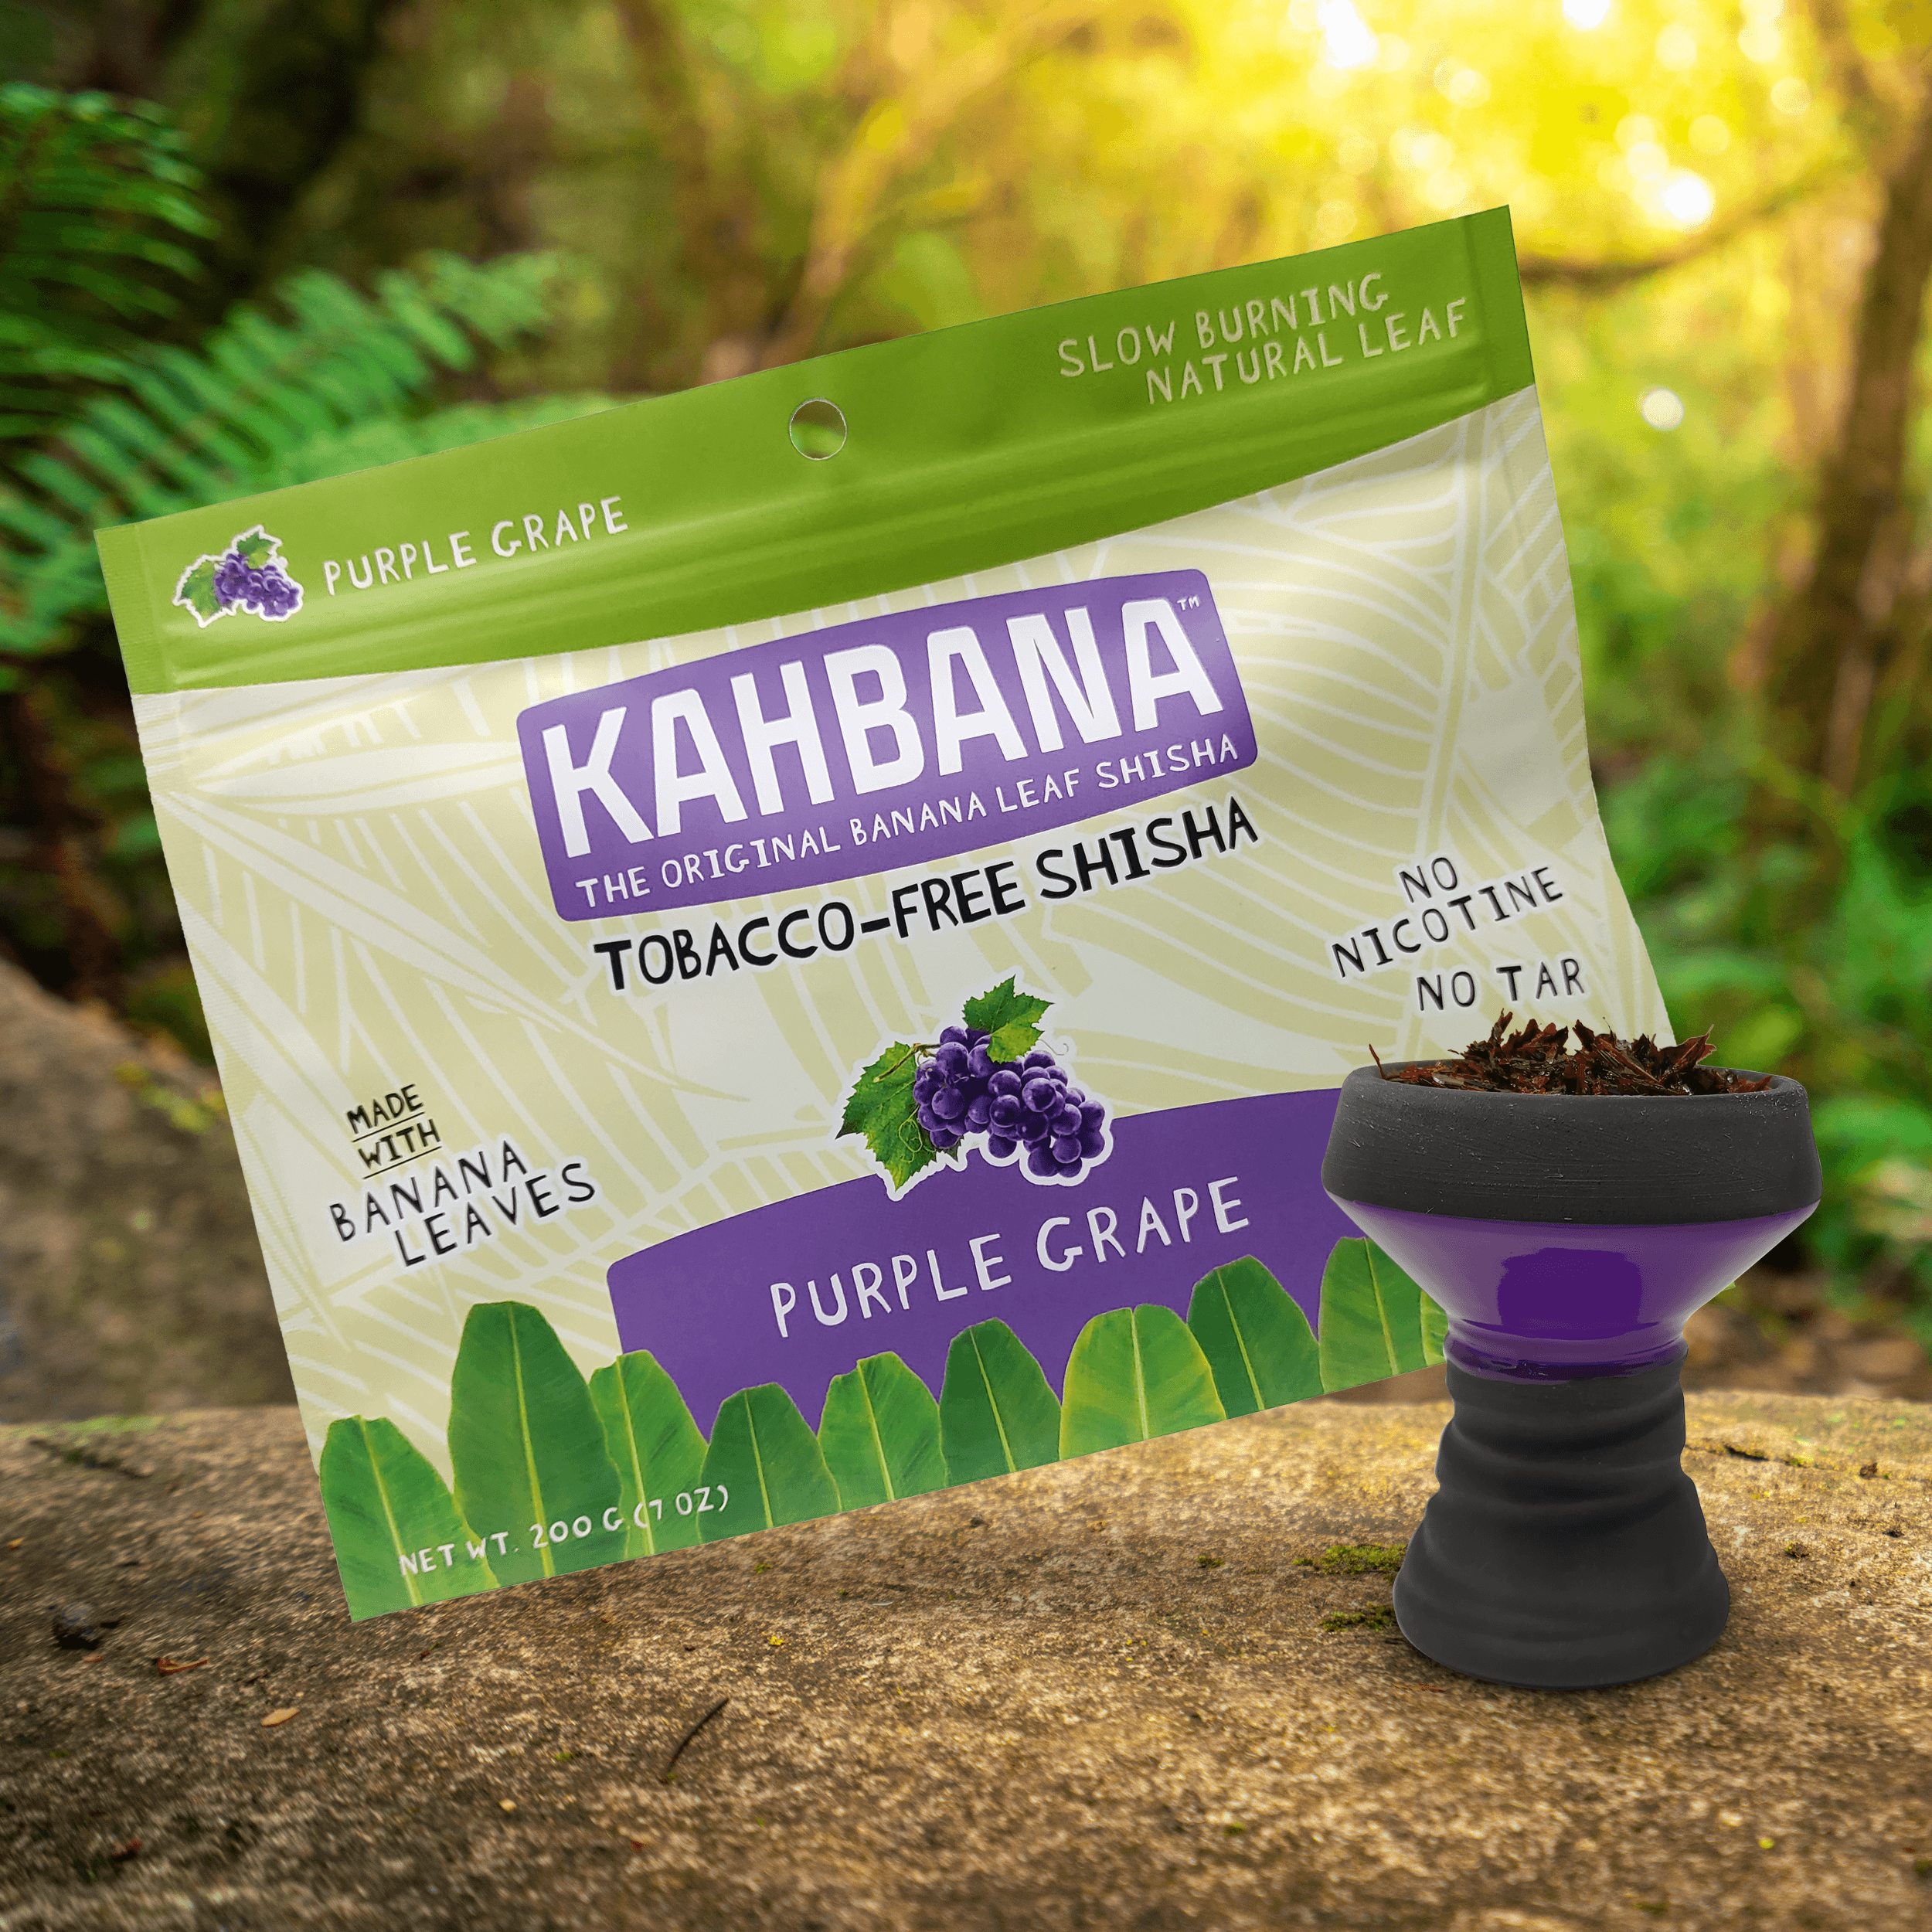 KAHBANA Original Banana Leaf Shisha Purple Grape - Lavoo